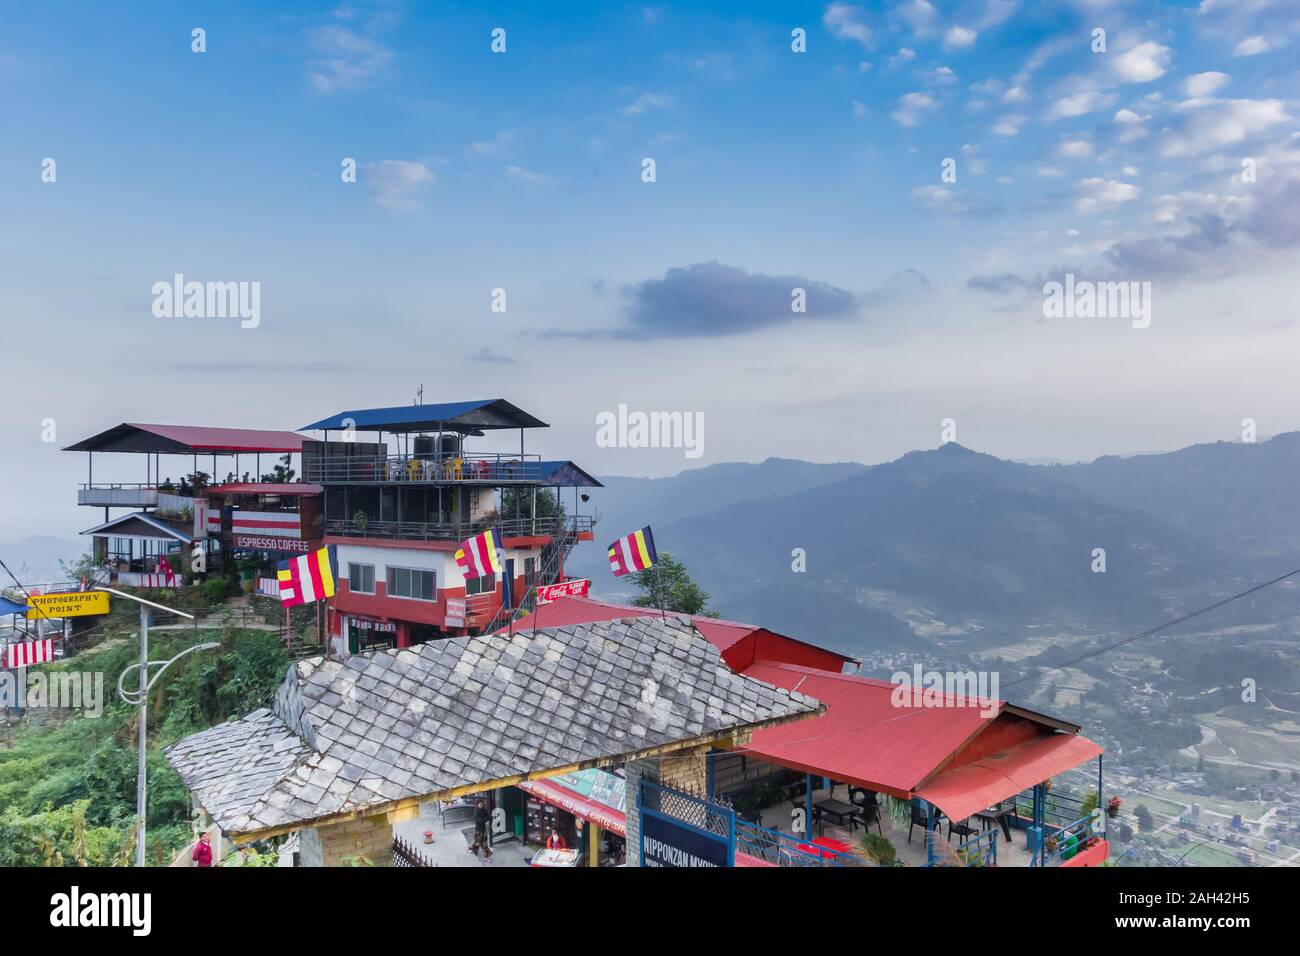 Restaurants on the hill near the Wordl Peace Pagoda in Pokhara, Nepal Stock Photo